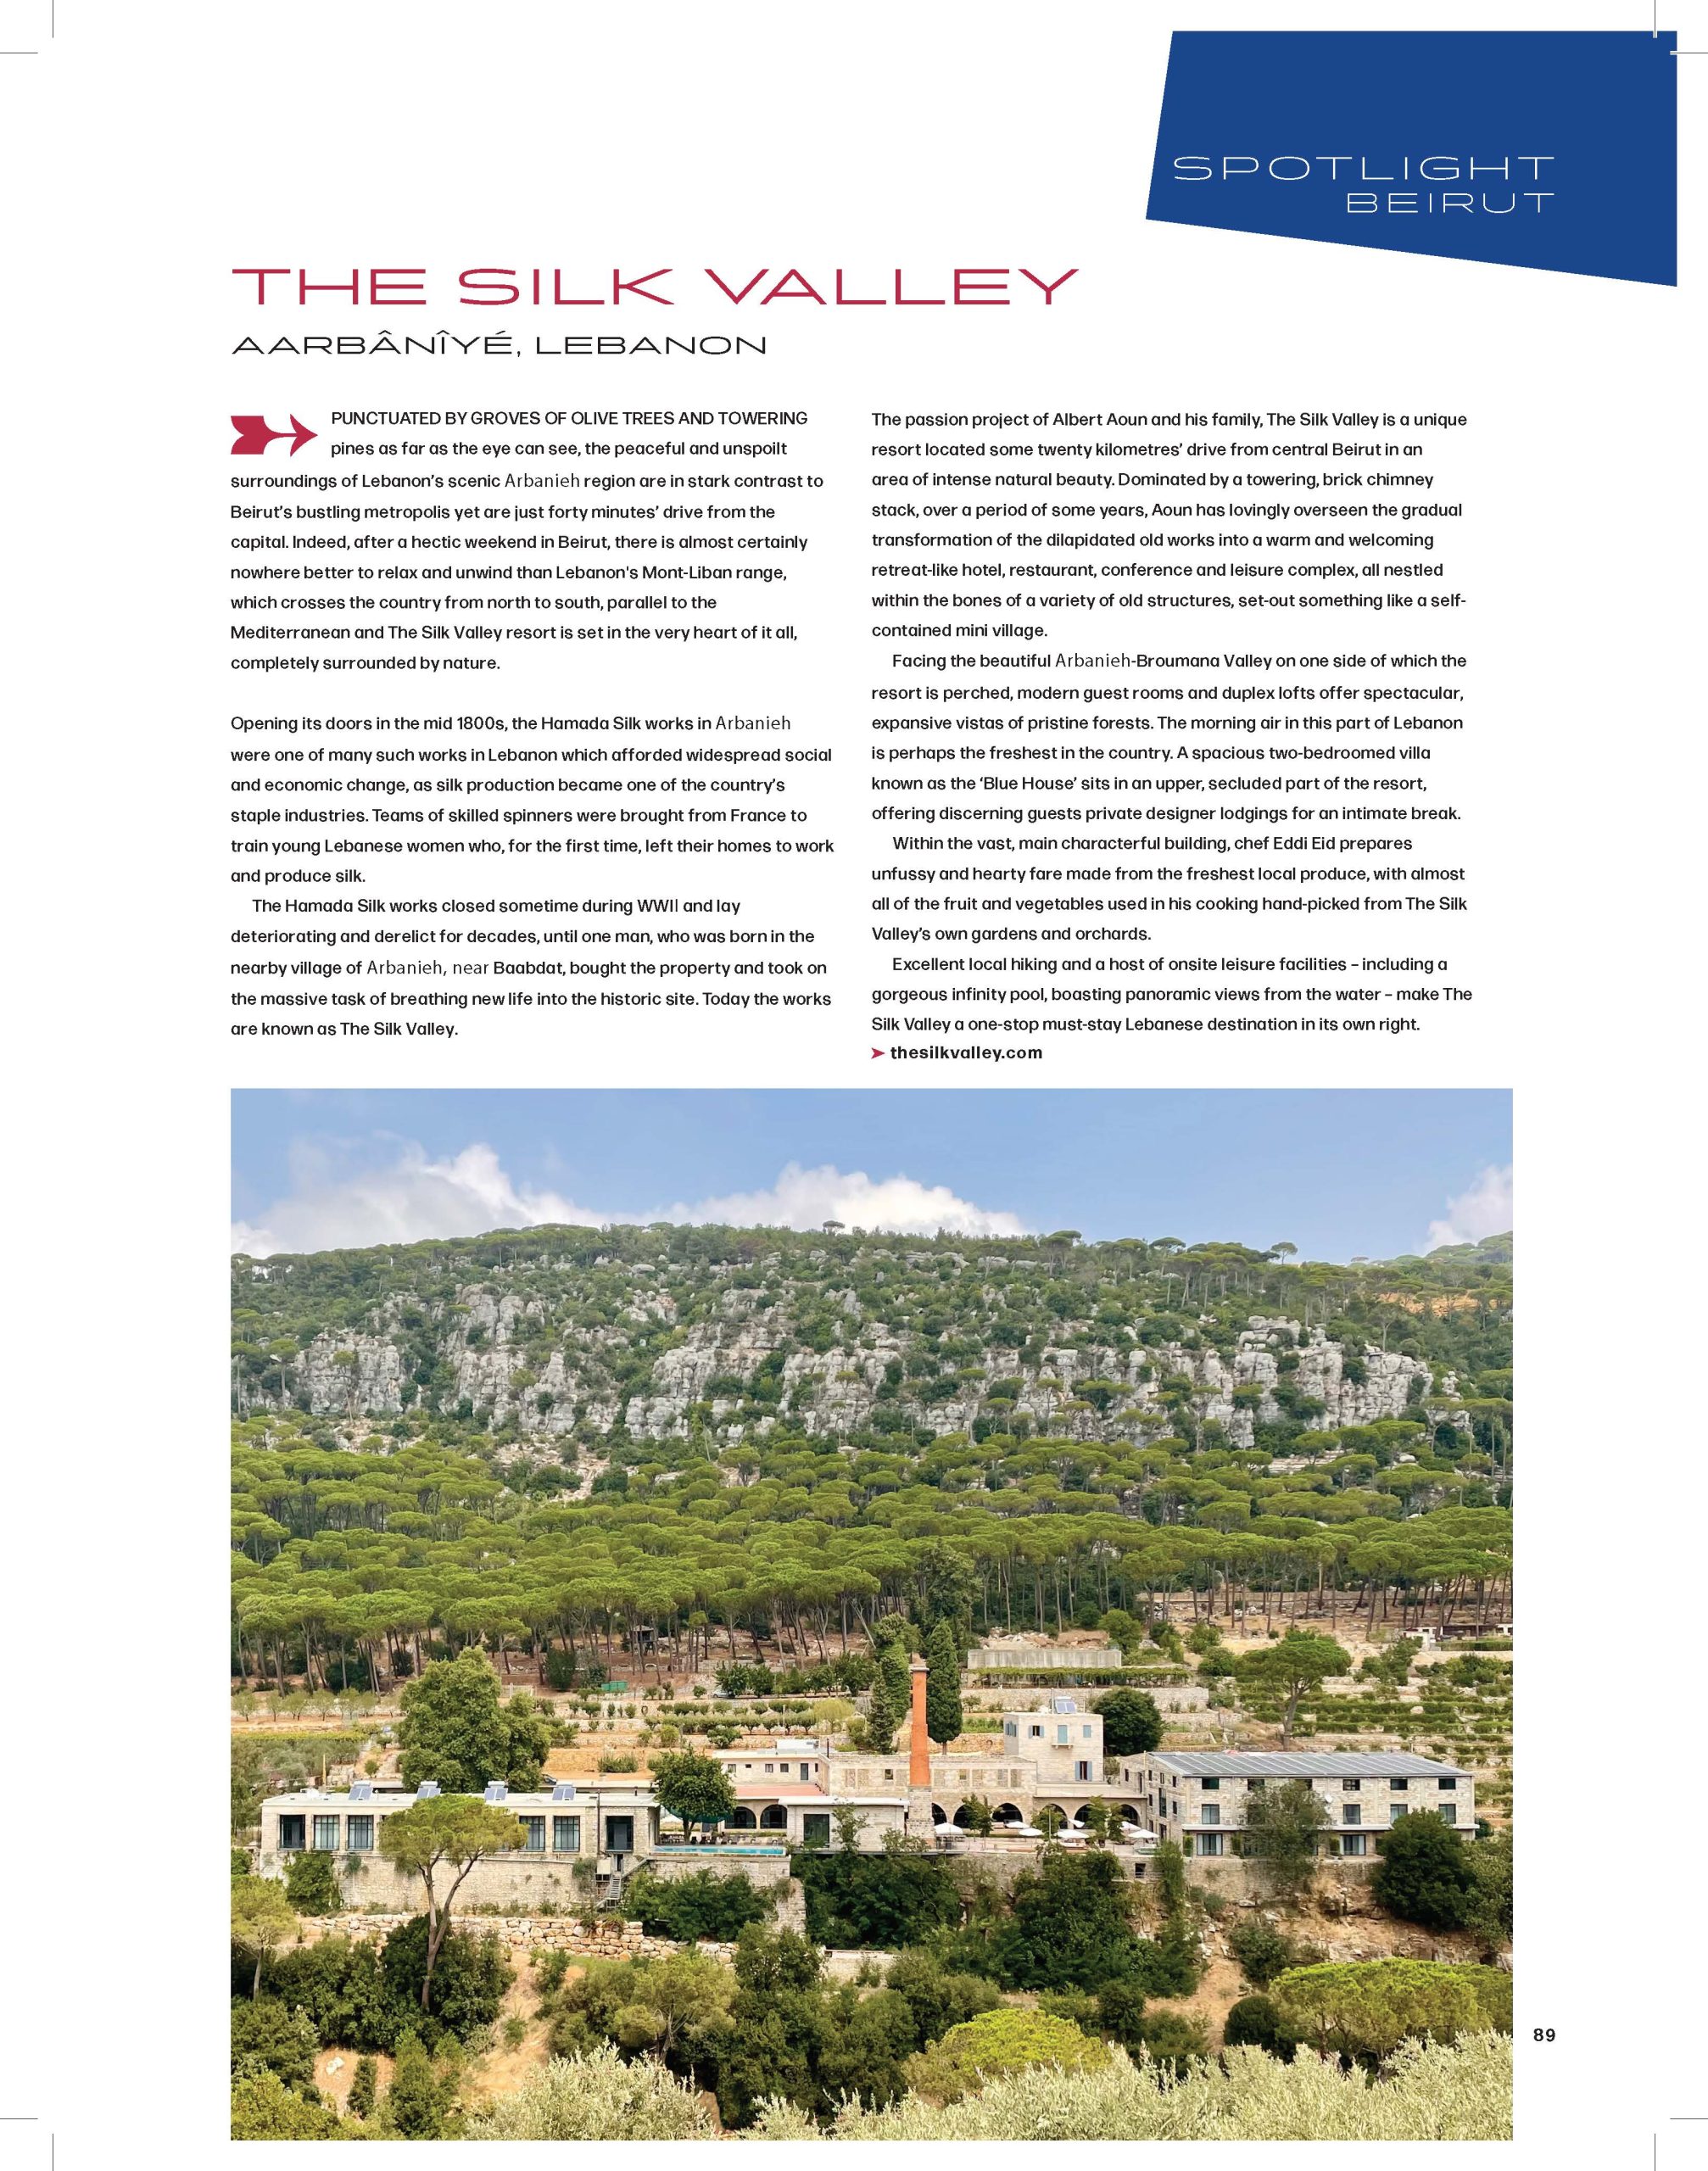 the silk valley - news